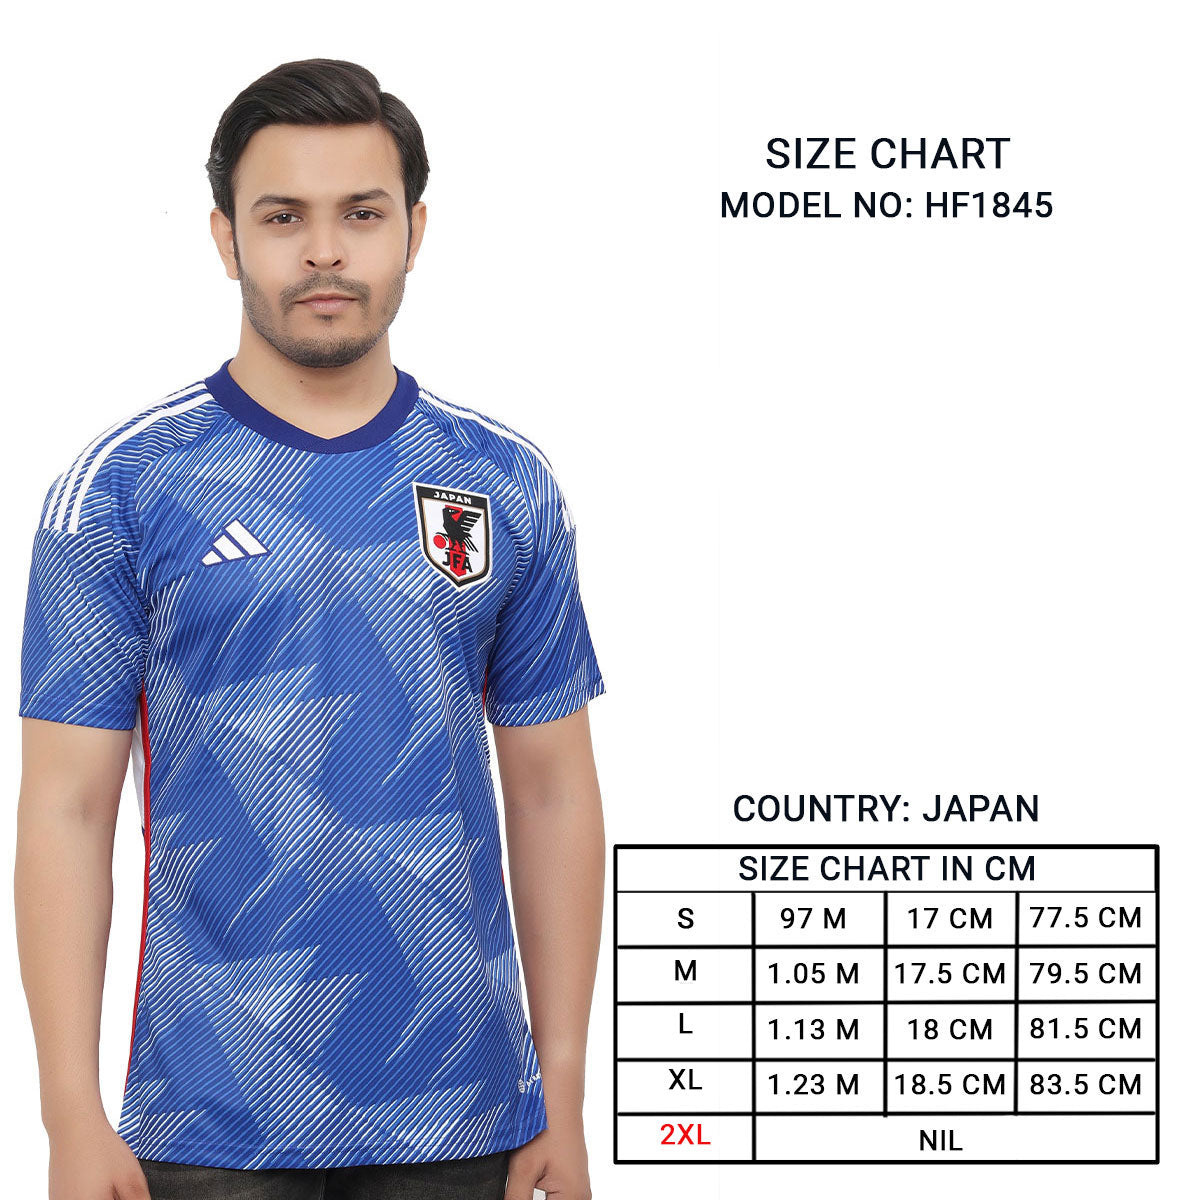 Japan 22 Home Jersey